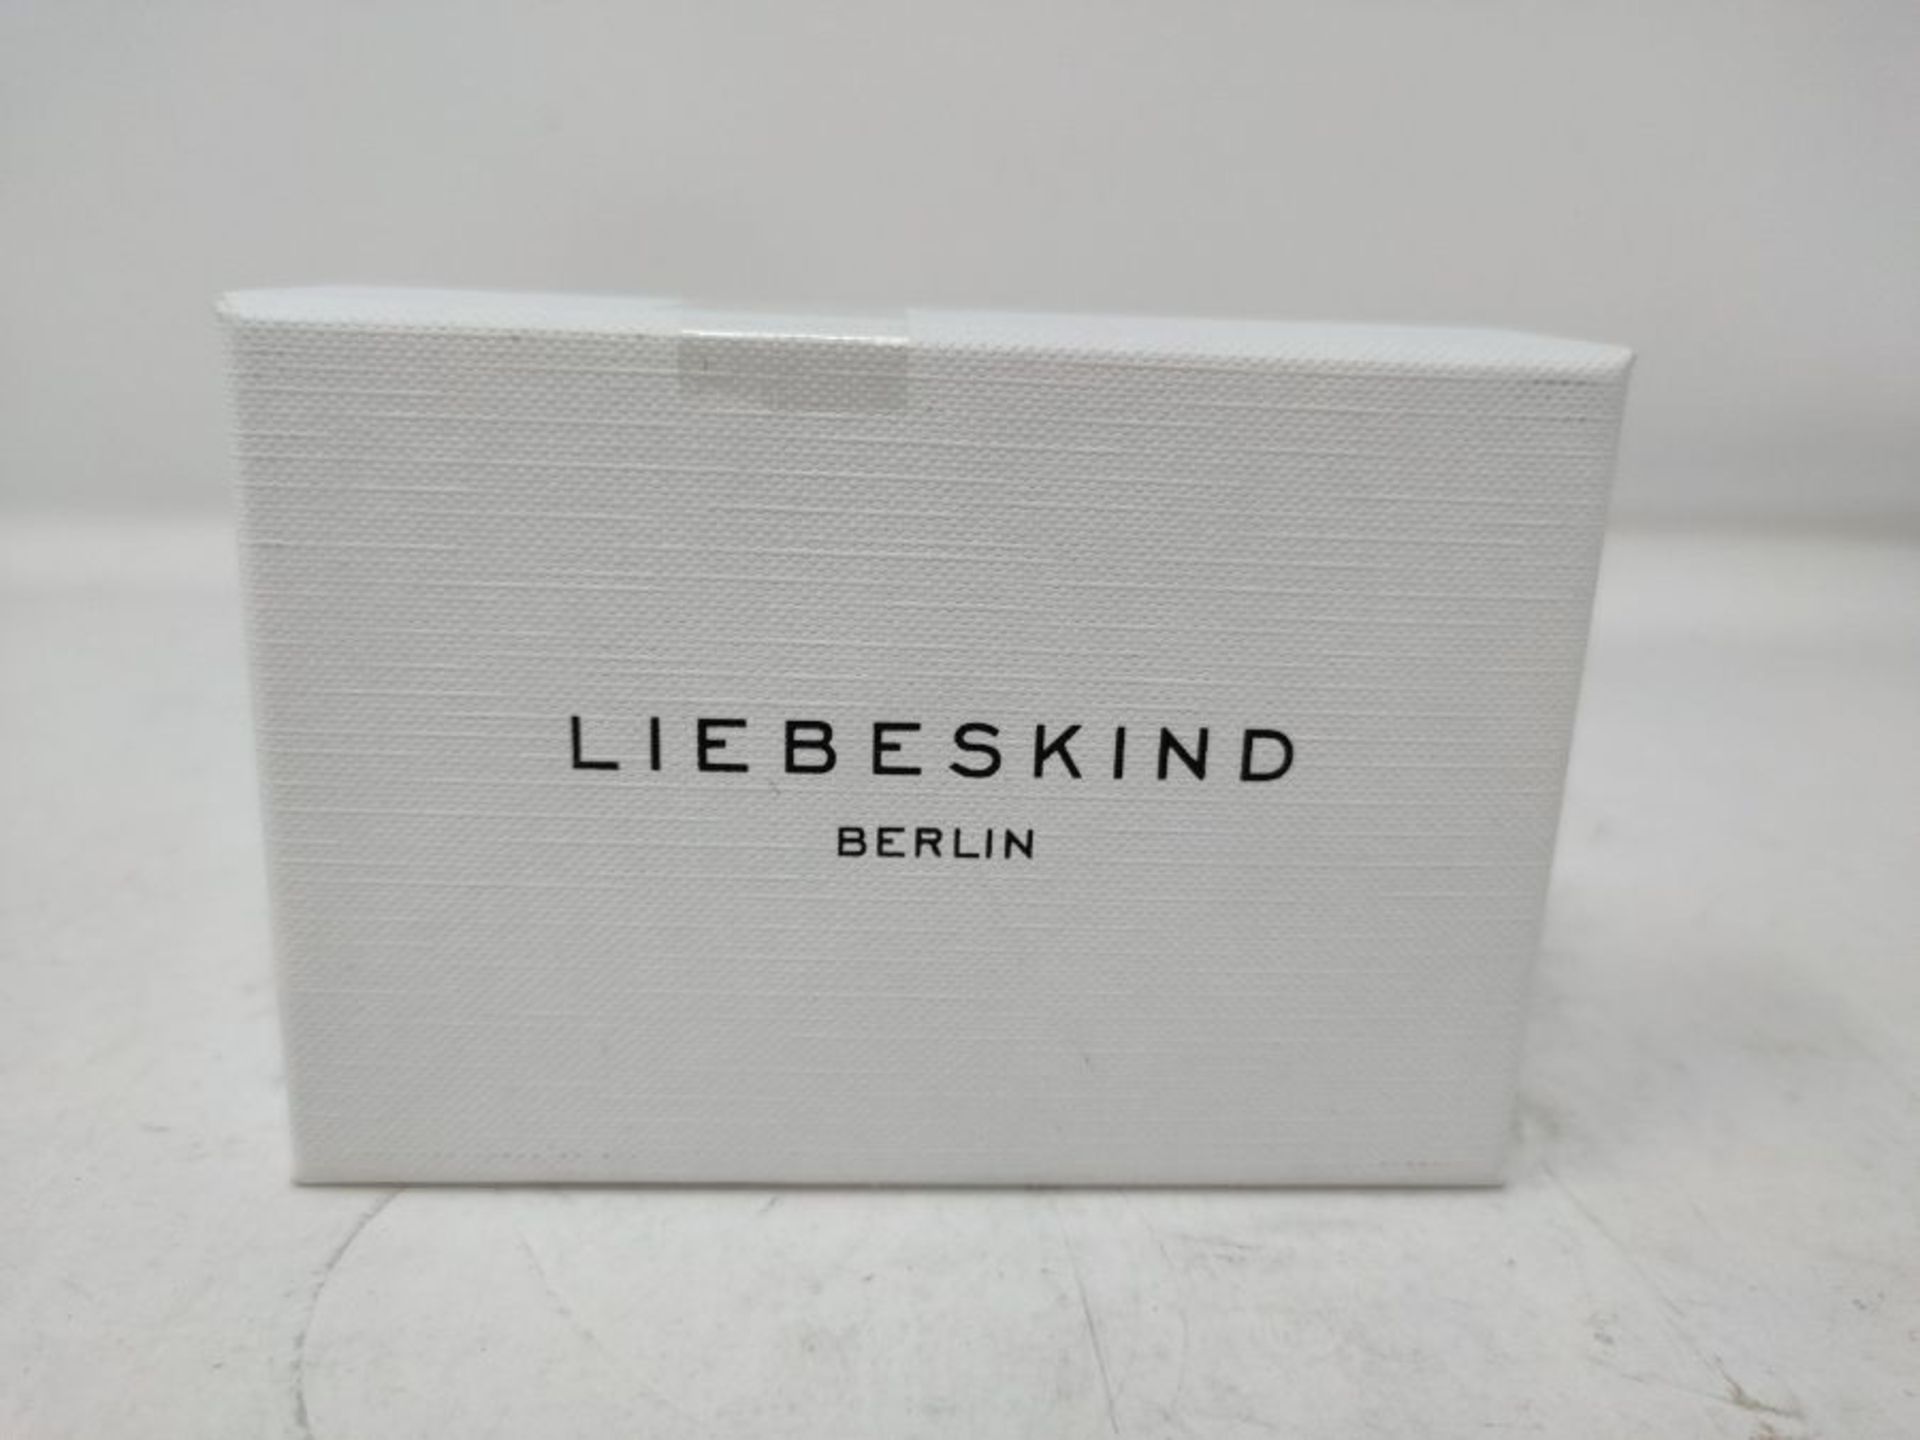 Liebeskind Berlin Bracelet, 20 cm, Stainless Steel, No gemstone., - Image 2 of 3